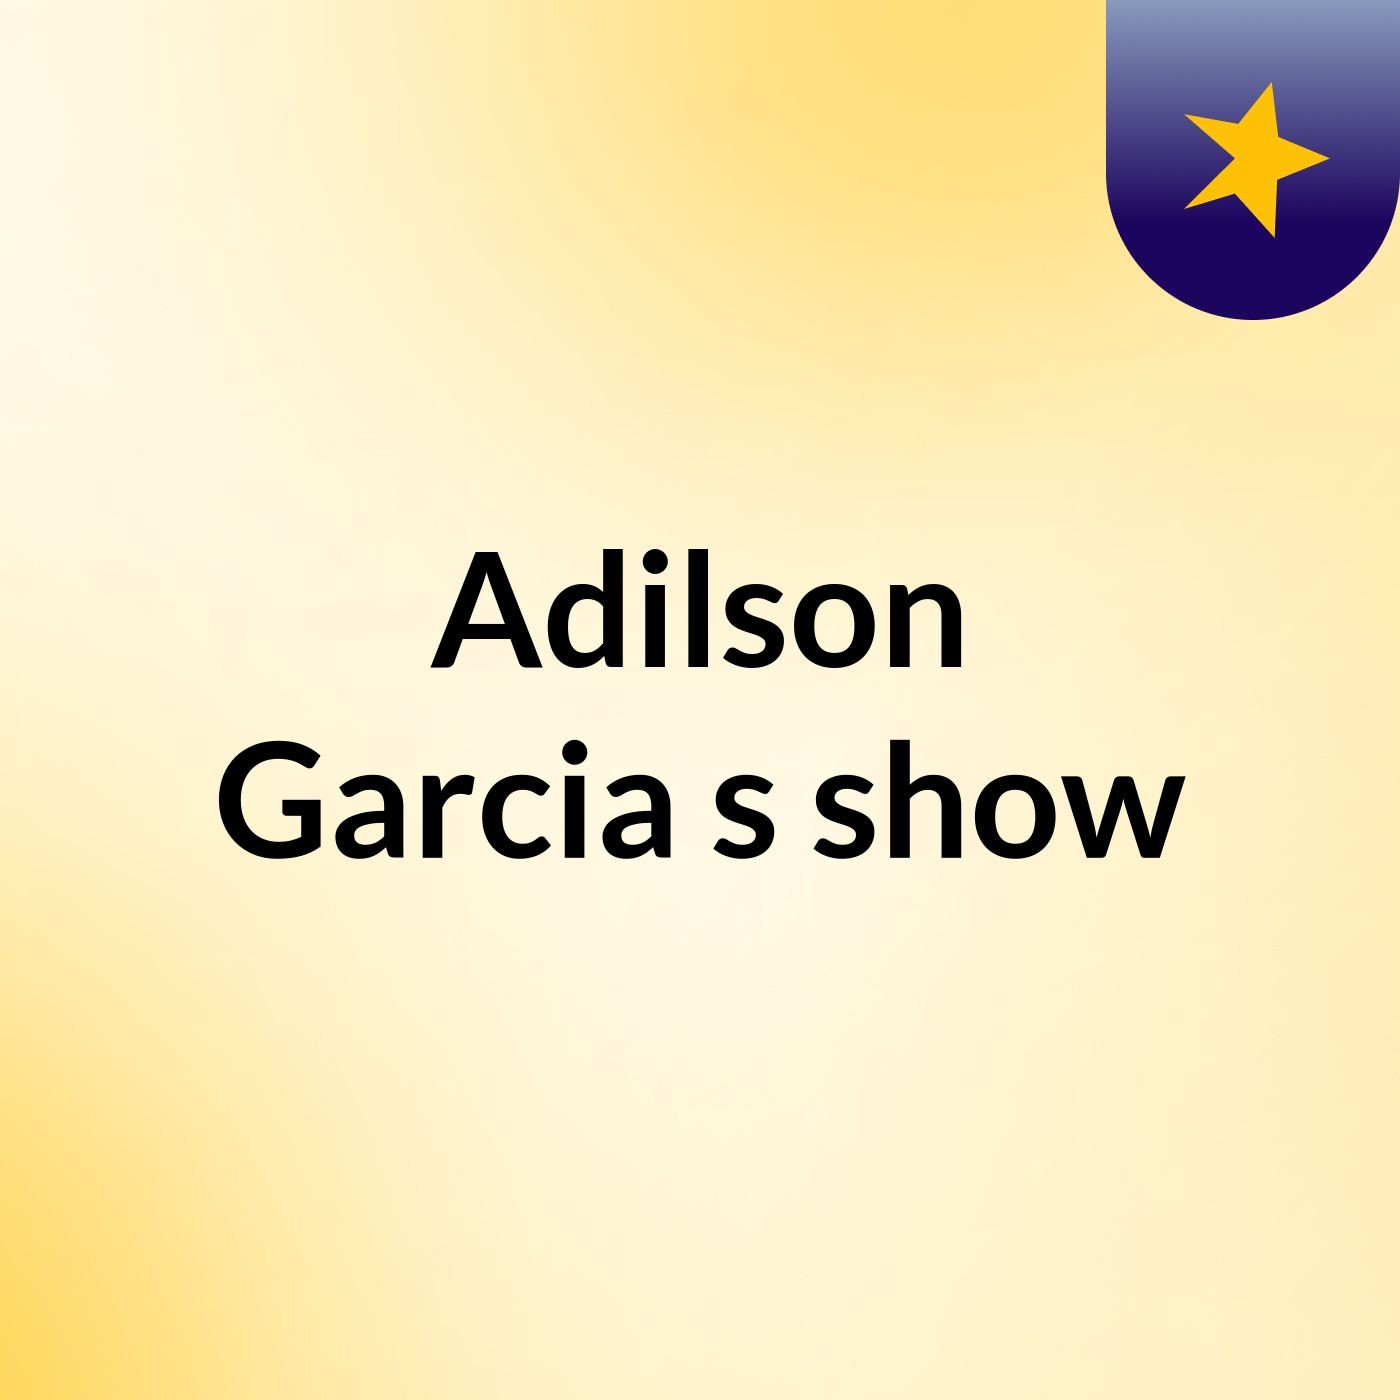 Adilson Garcia's show